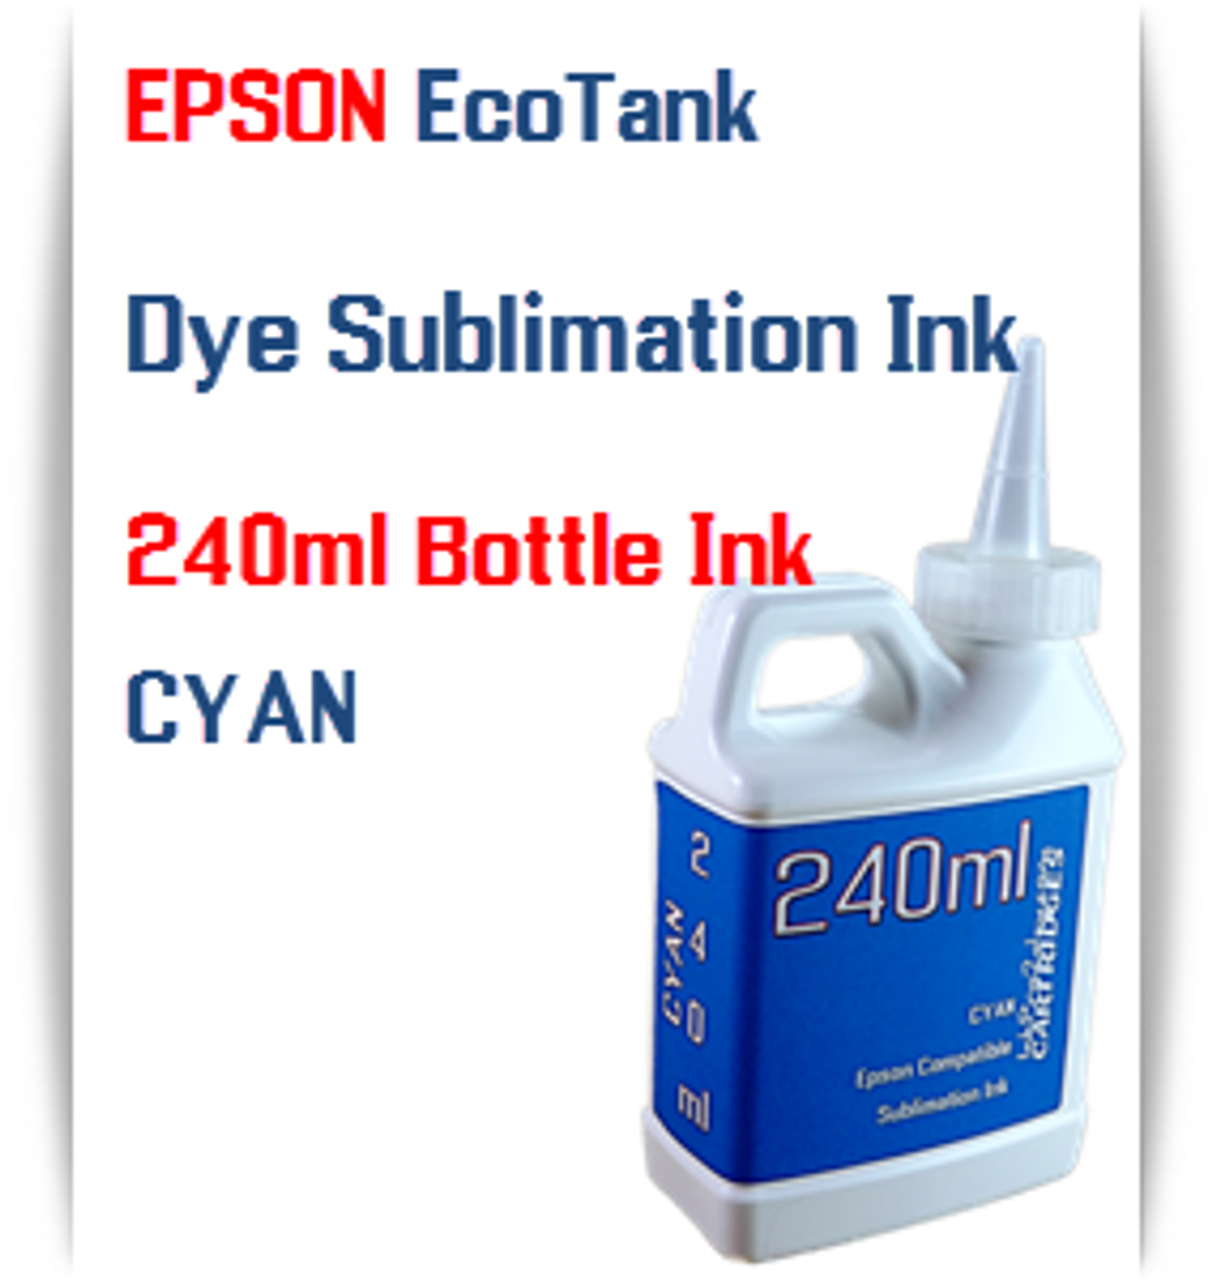 Cyan EPSON EcoTank printer Dye Sublimation Ink 240ml bottles